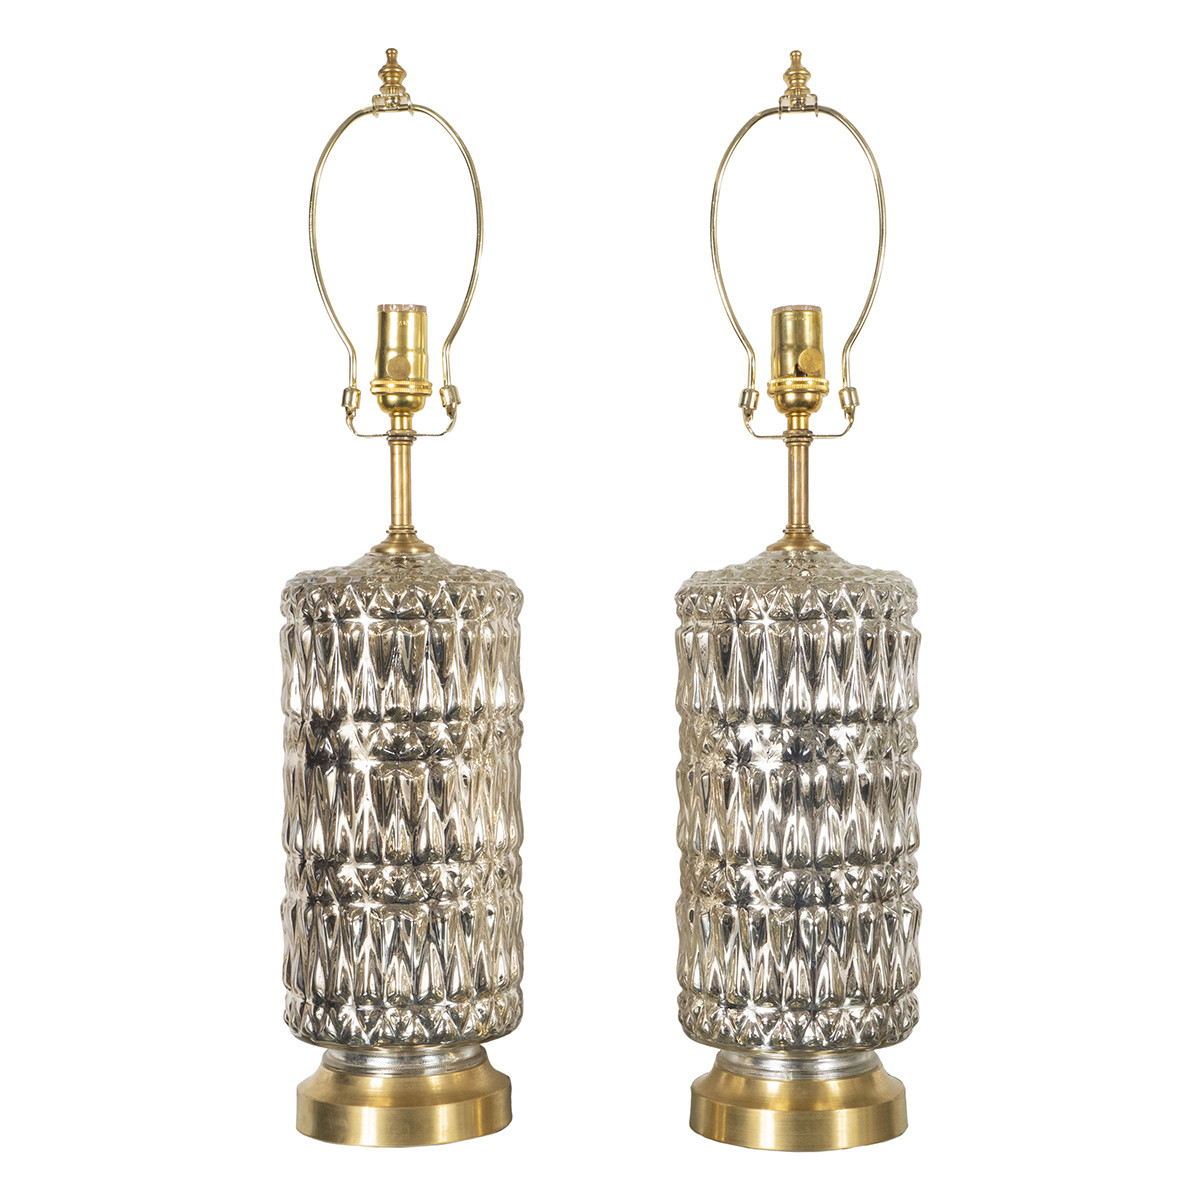 Pair of diamond patterned mercury glass lamps